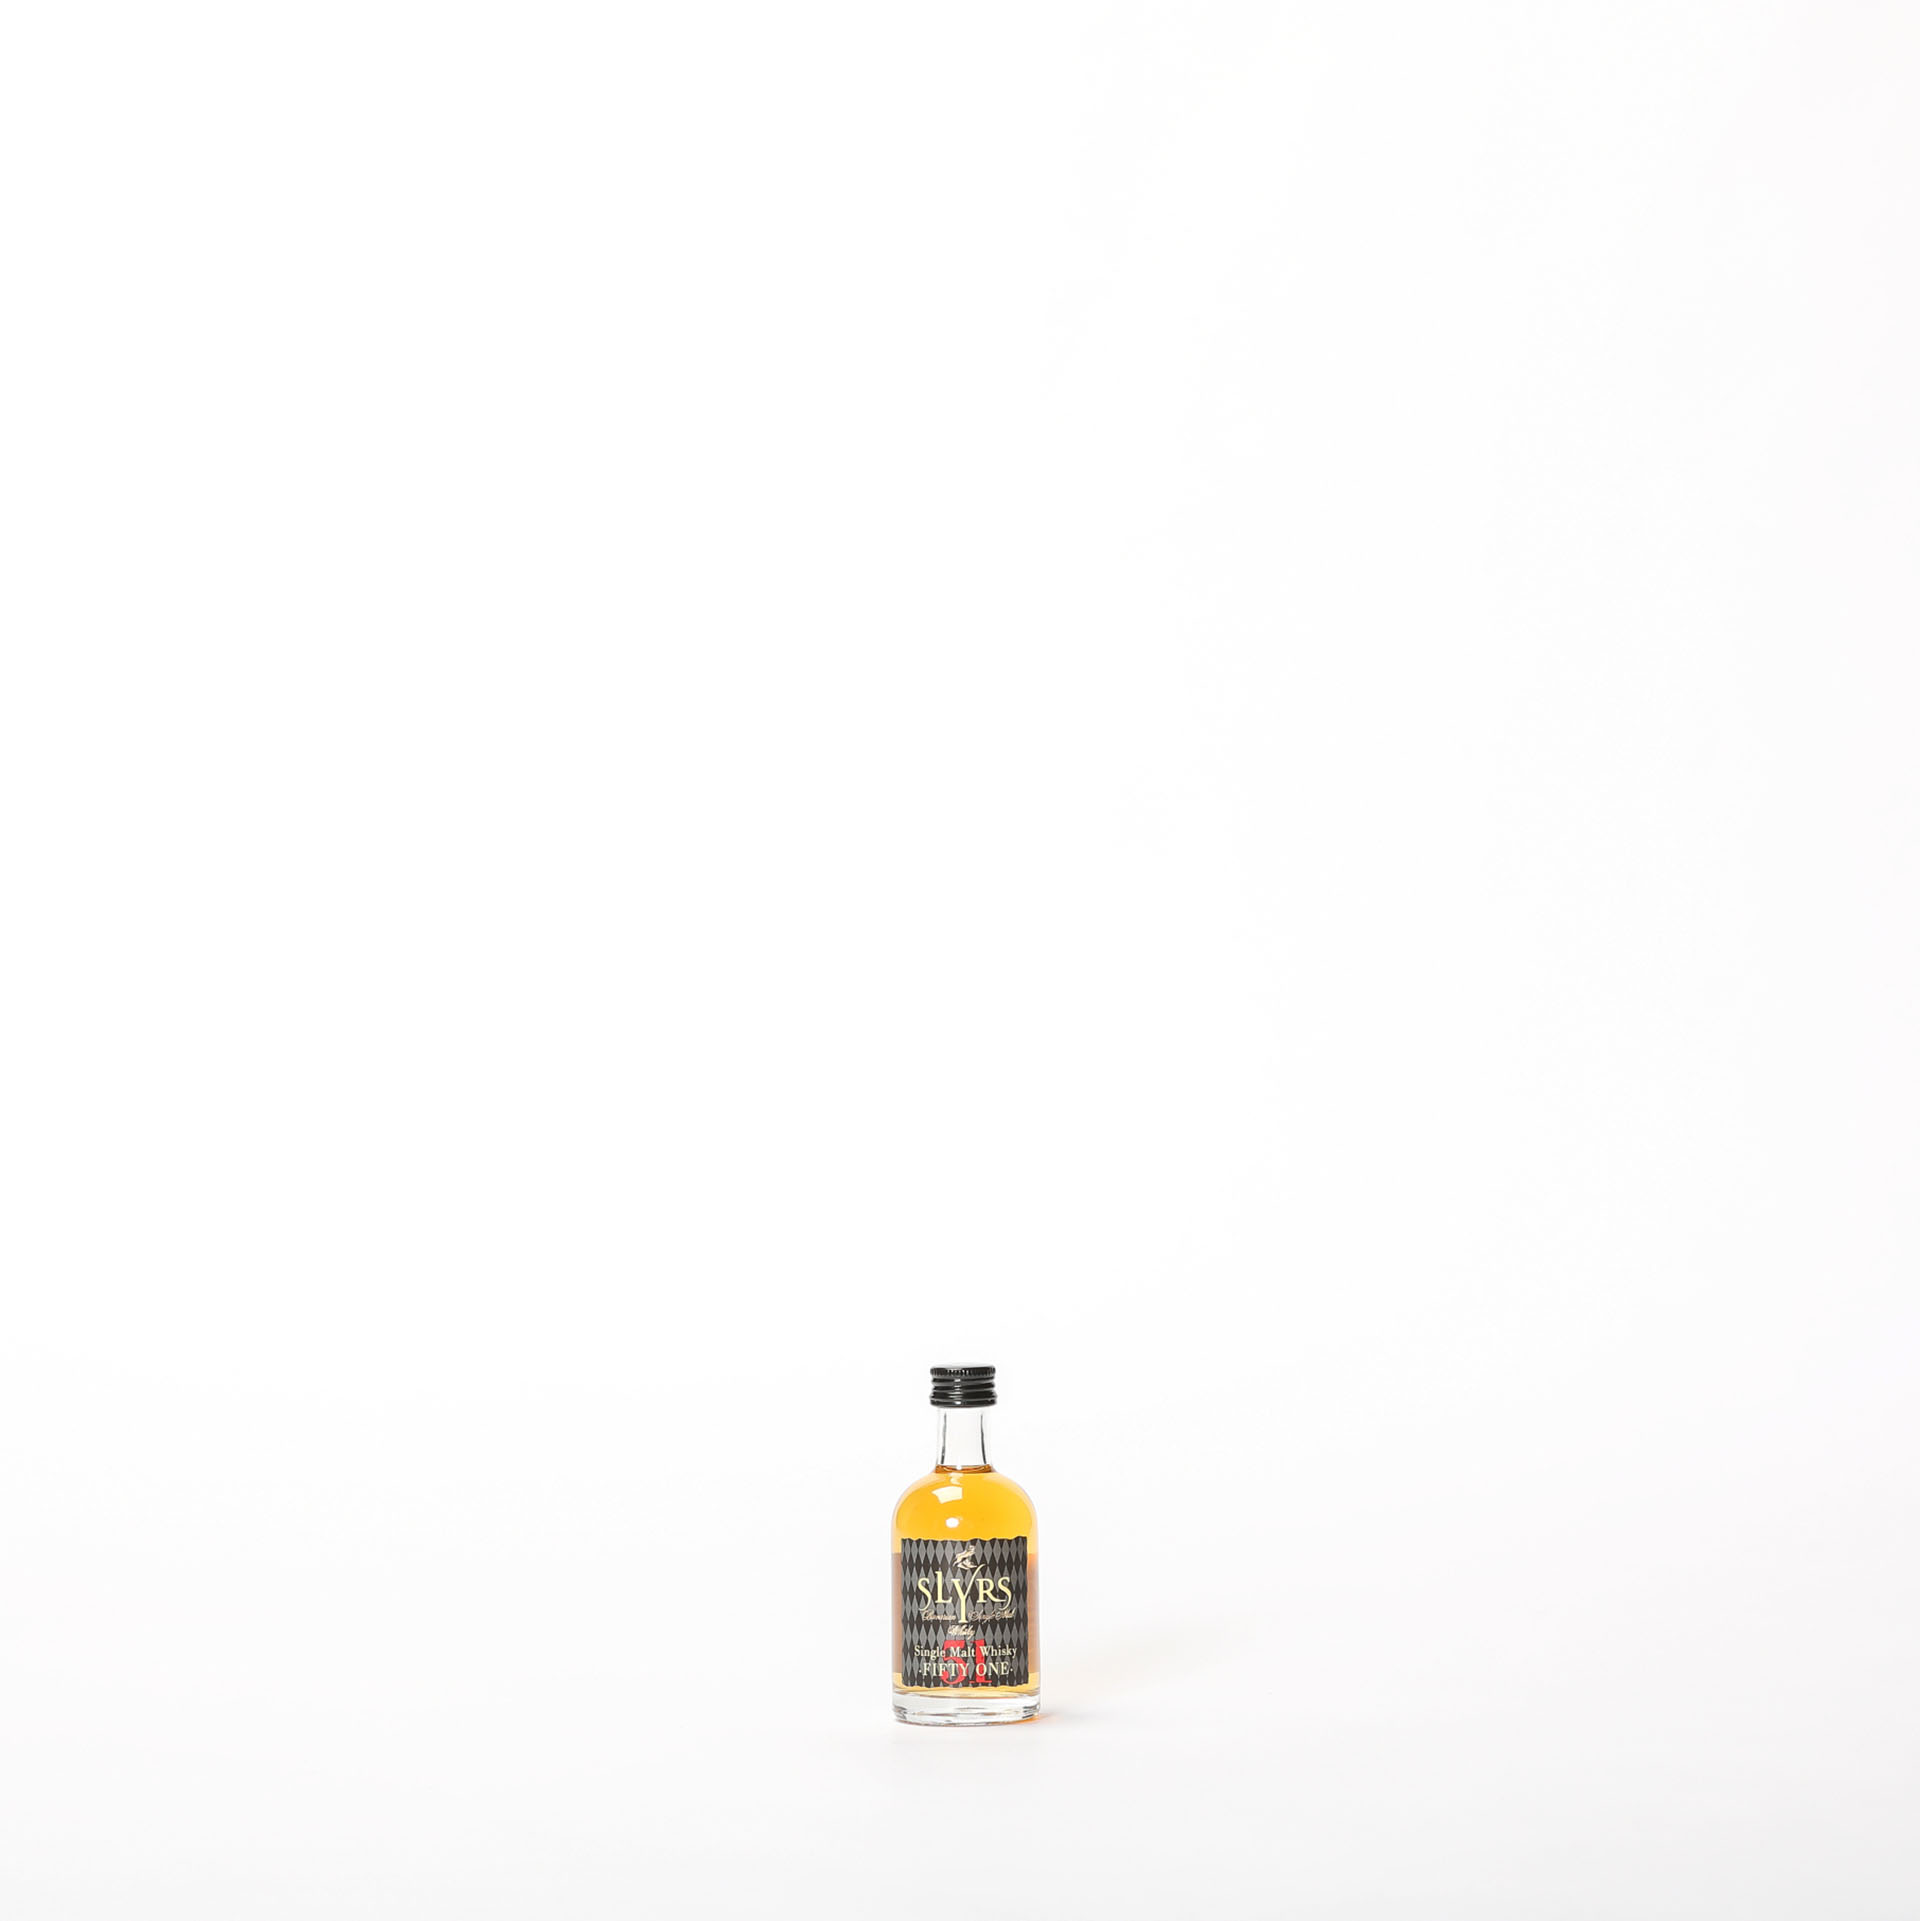 Slyrs 51 Single Malt Whisky im DINZLER Shop kaufen